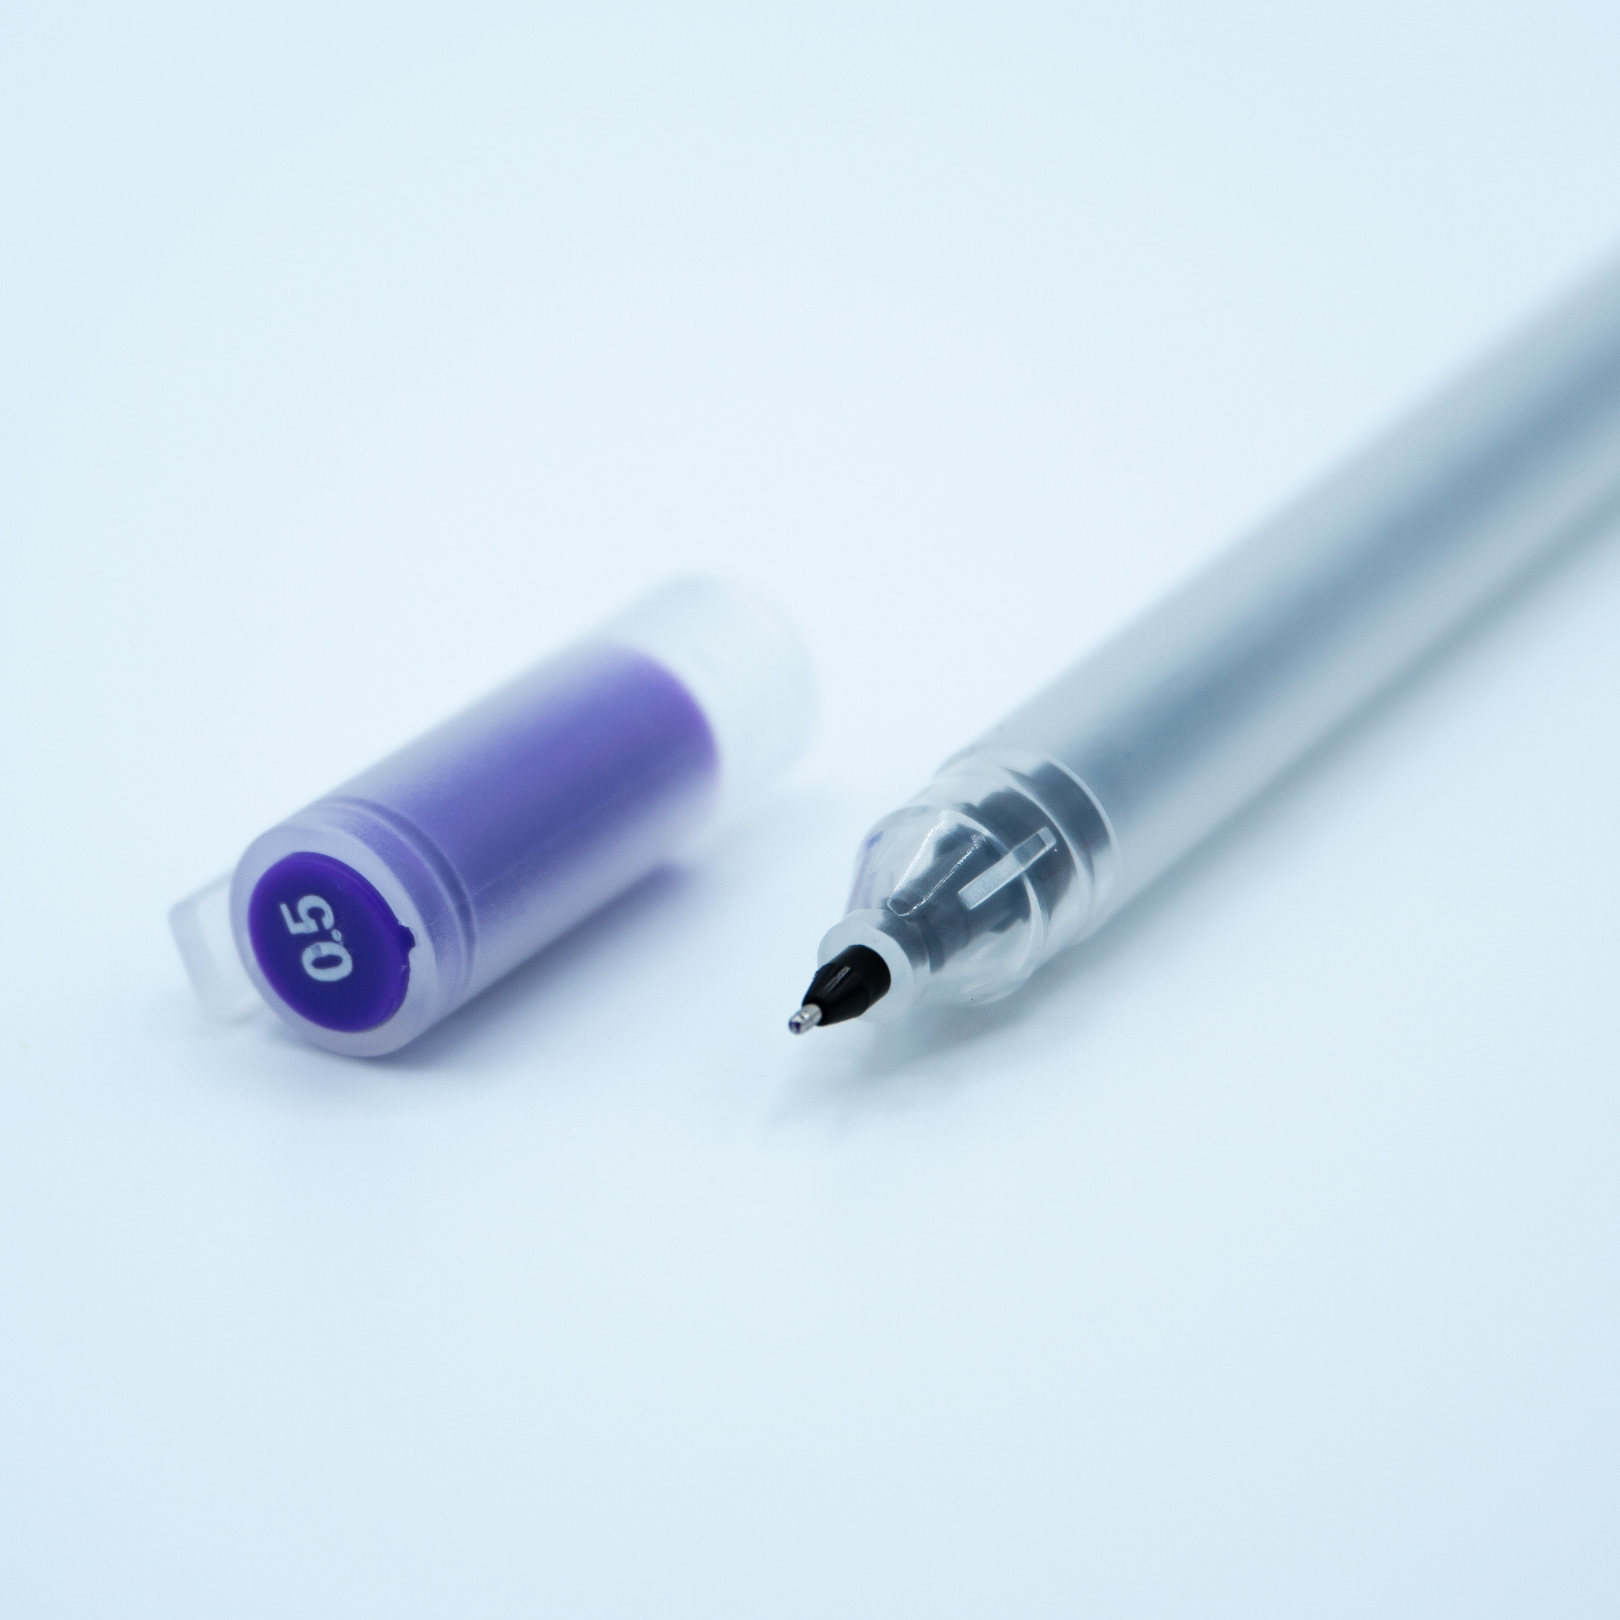 Close up of purple pen tip